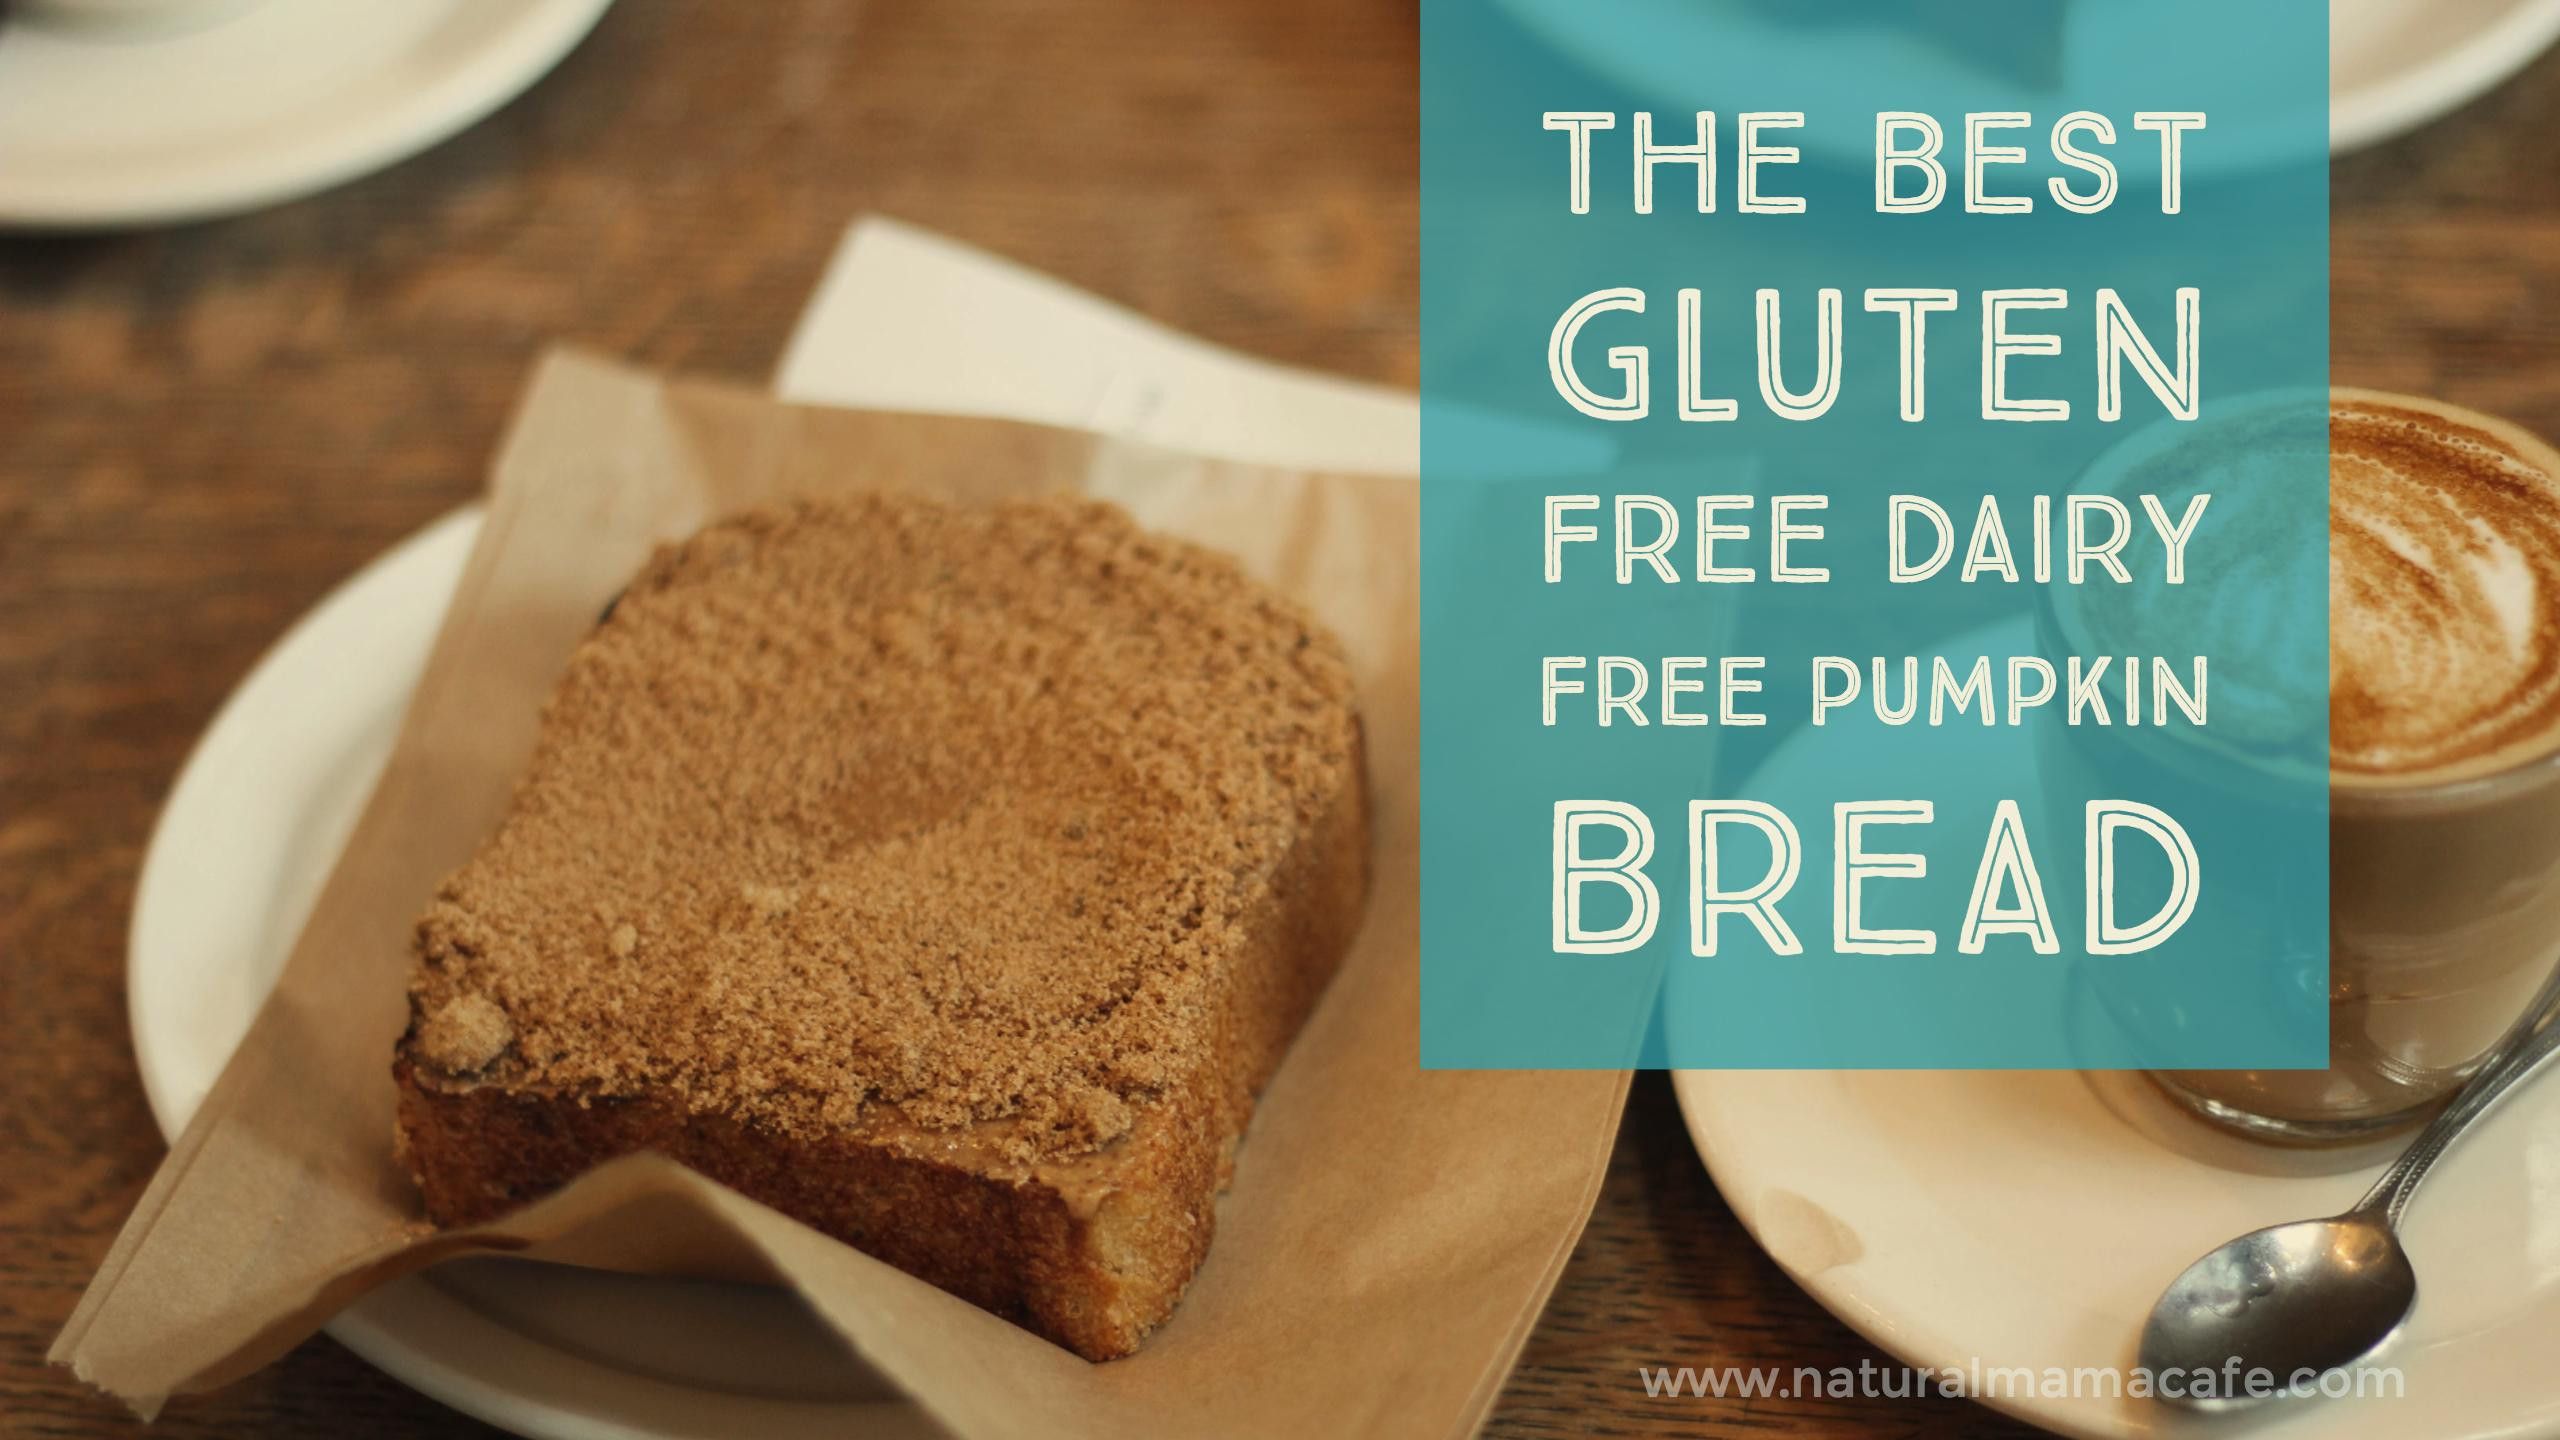 Gluten Free Dairy Free Pumpkin Bread
 A Fall Tradition The Best Gluten Free Dairy Free Pumpkin